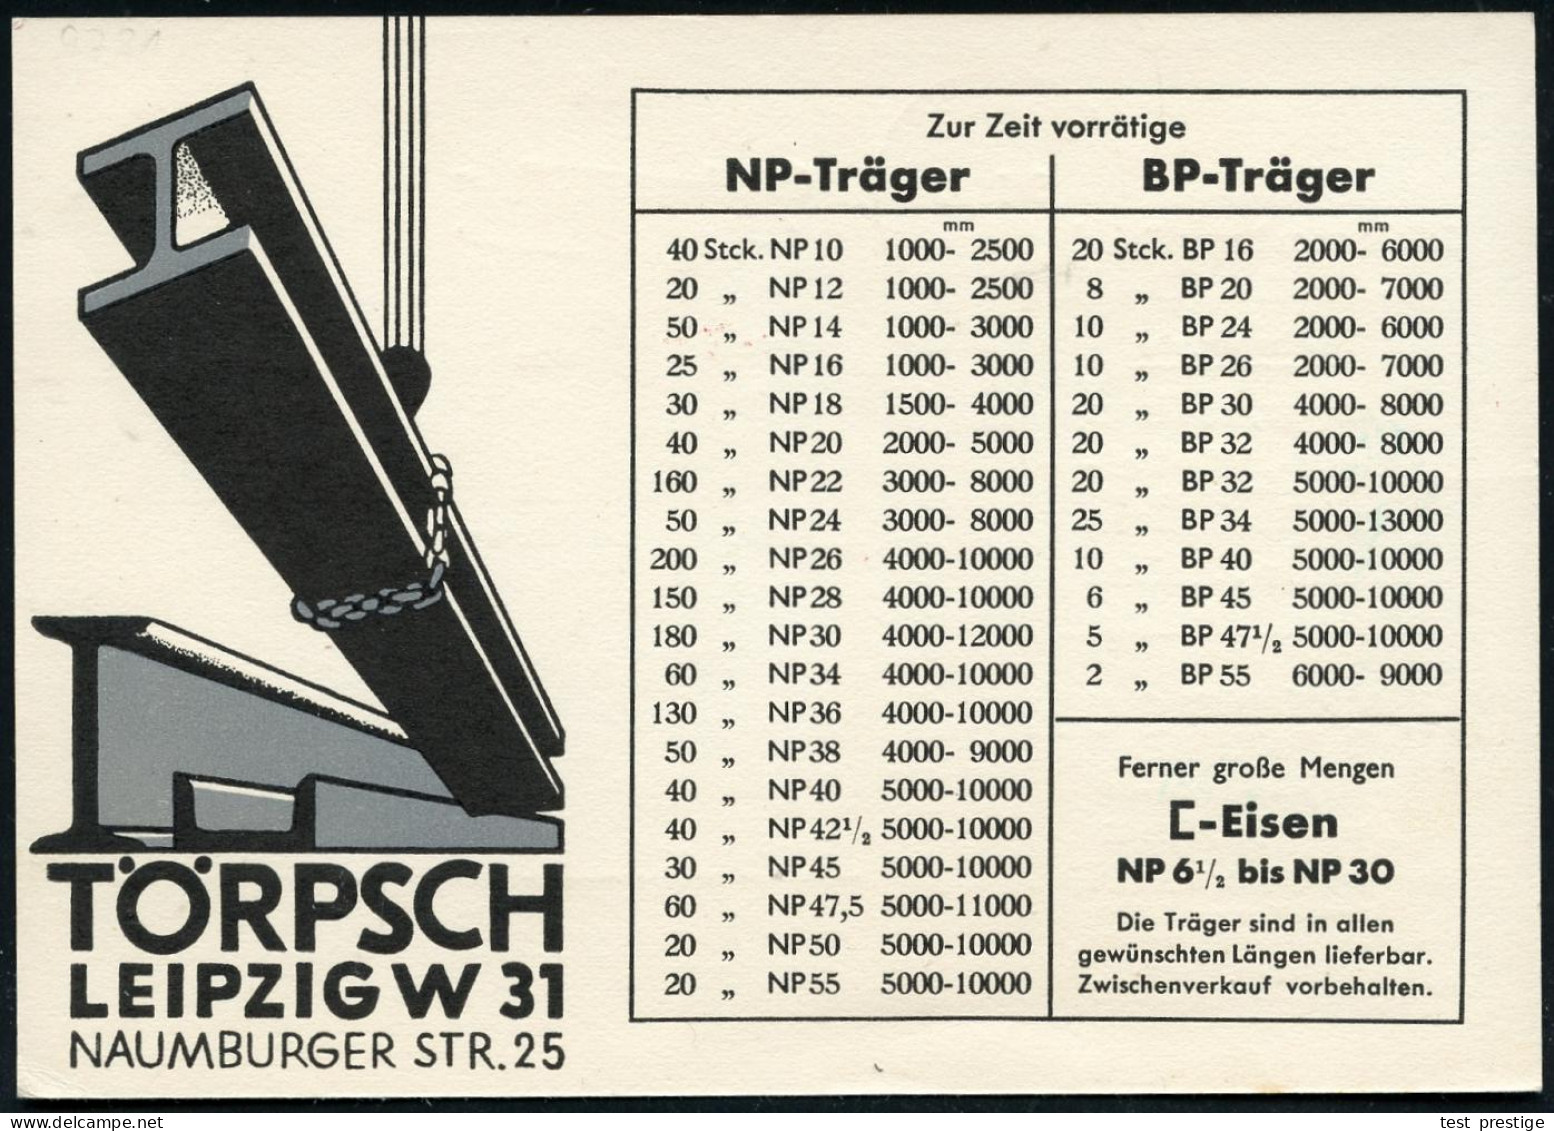 LEIPZIG/ W 31/ H.Törpsch.. 1936 (5.5.) AFS Francotyp (Monogr.-Logo) Firmen-Reklame-Kt.: H. TÖRPSCH:: Träger, U-Eisen, Ru - Autres & Non Classés